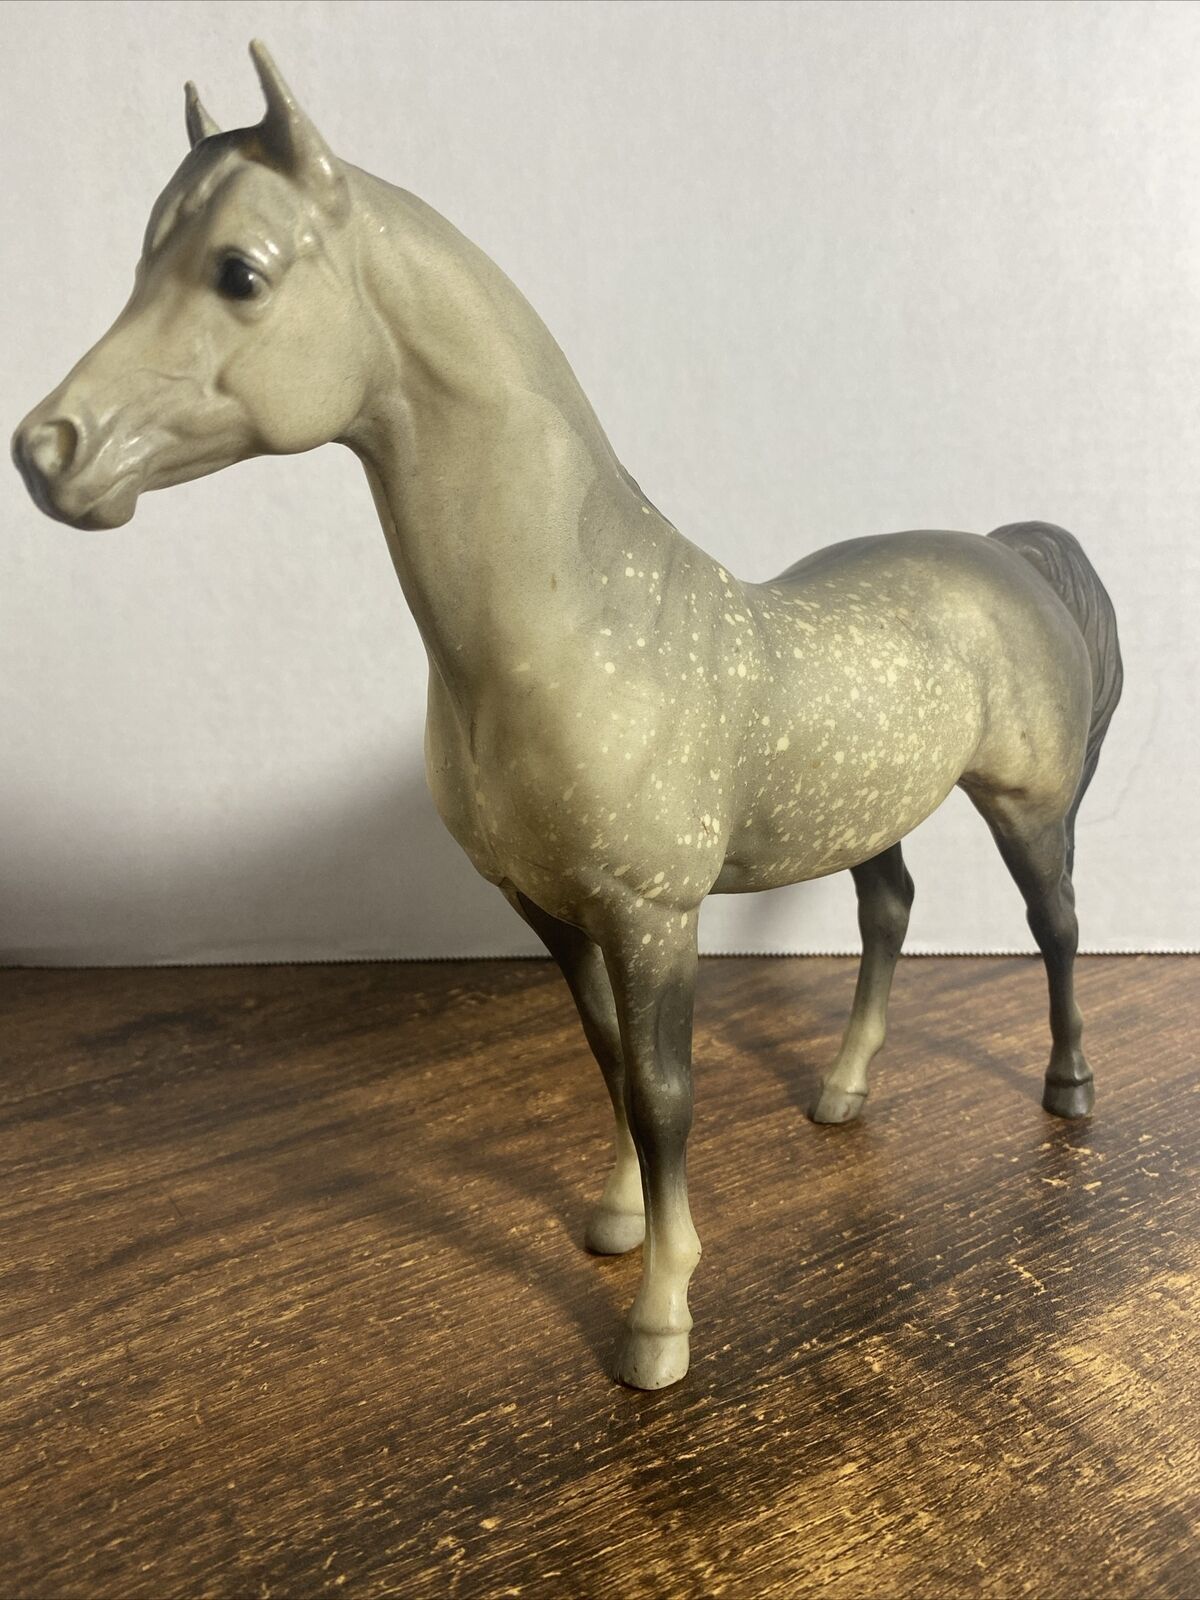 Vintage Breyer Horse #215 WILD Semigloss Version Dapple Grey Proud Arabian Mare